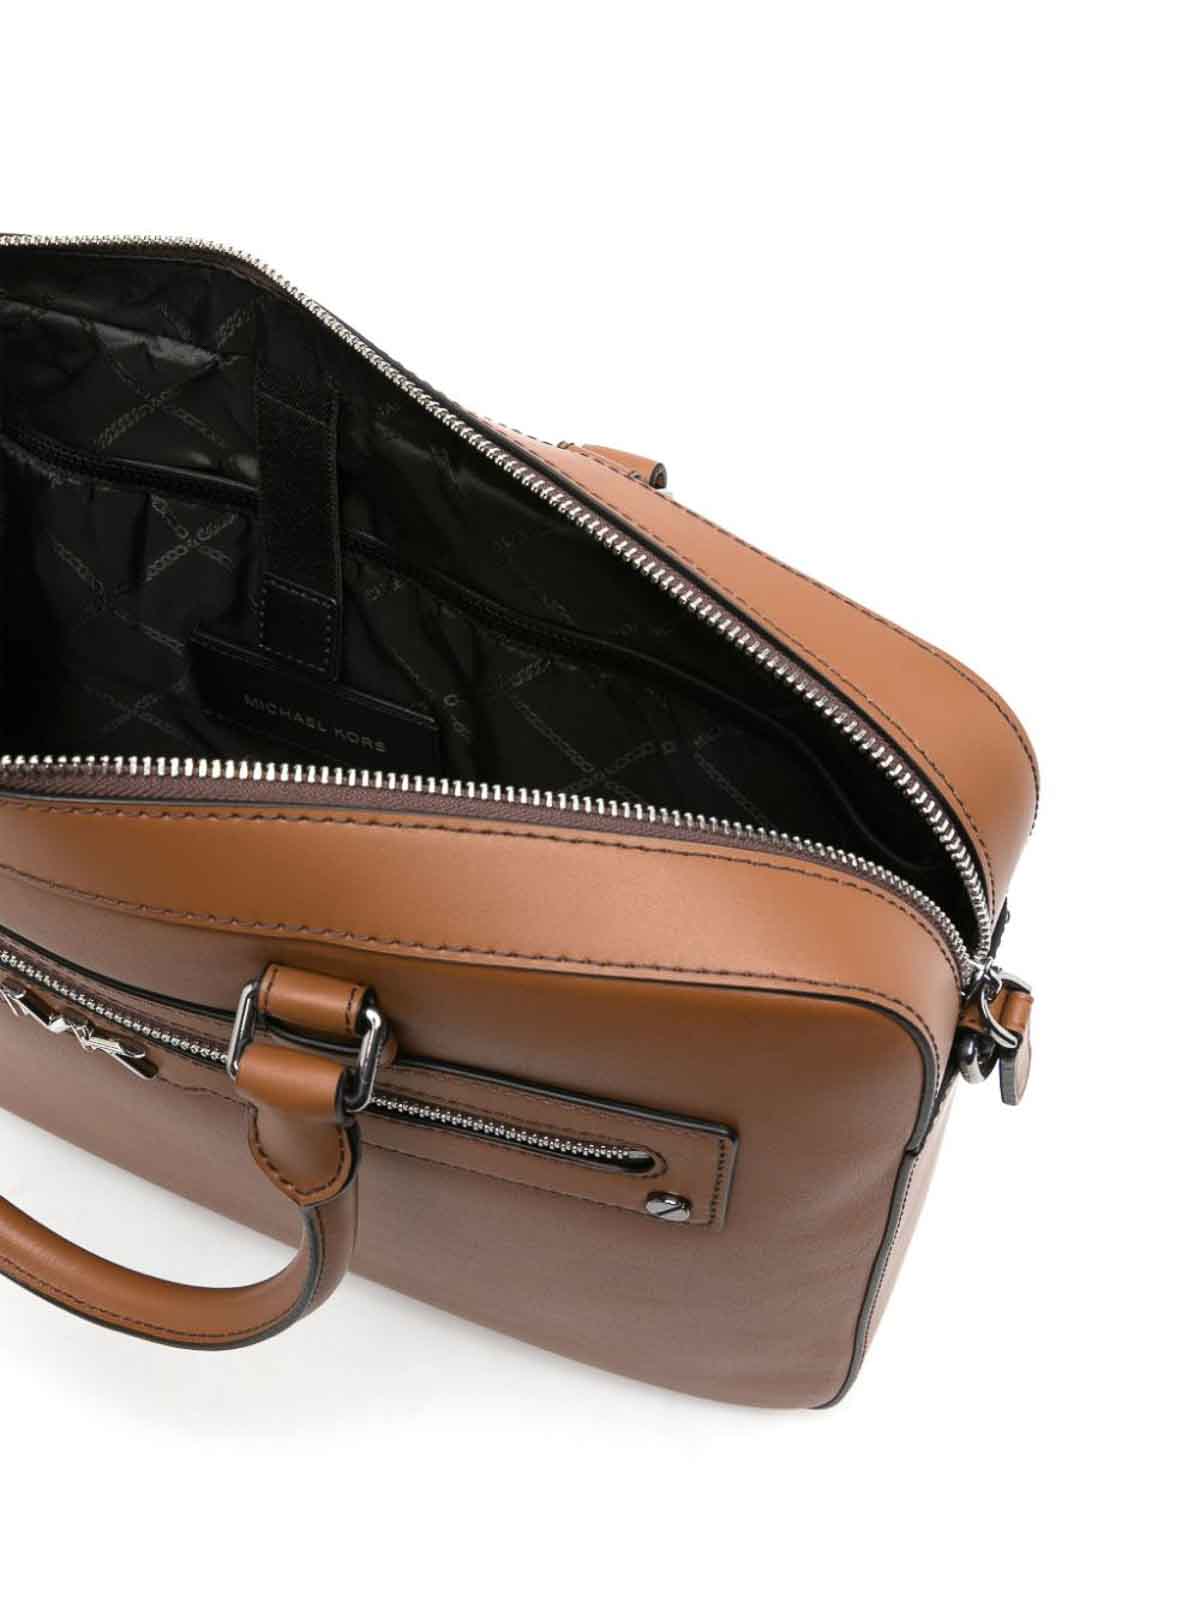 Michael Kors Laptop Bag